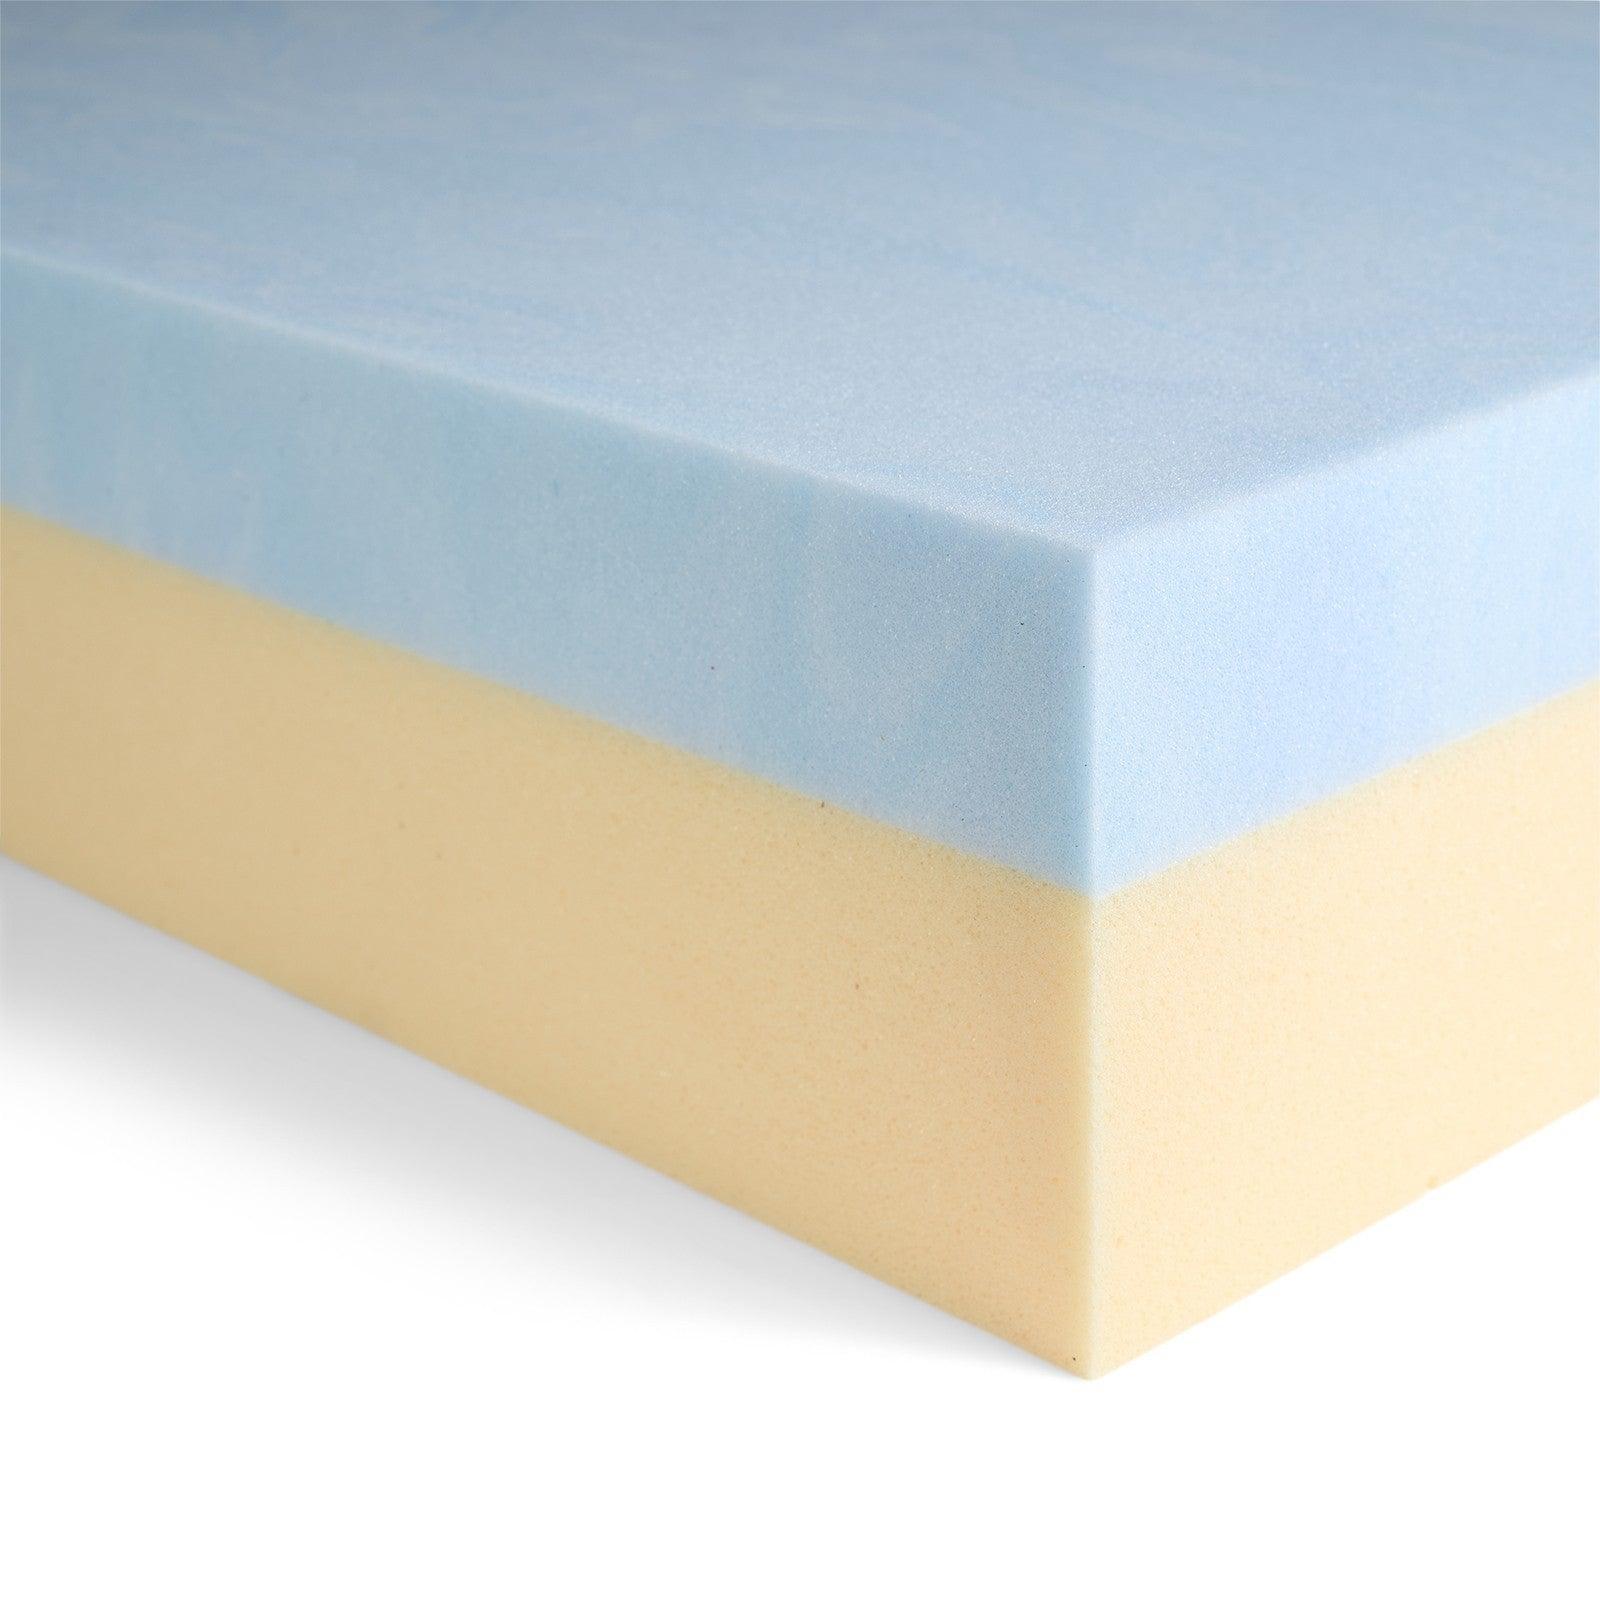 SUPPORT PLUS High Density Foam Blocks Upholstery Foam 4 Inch Thick